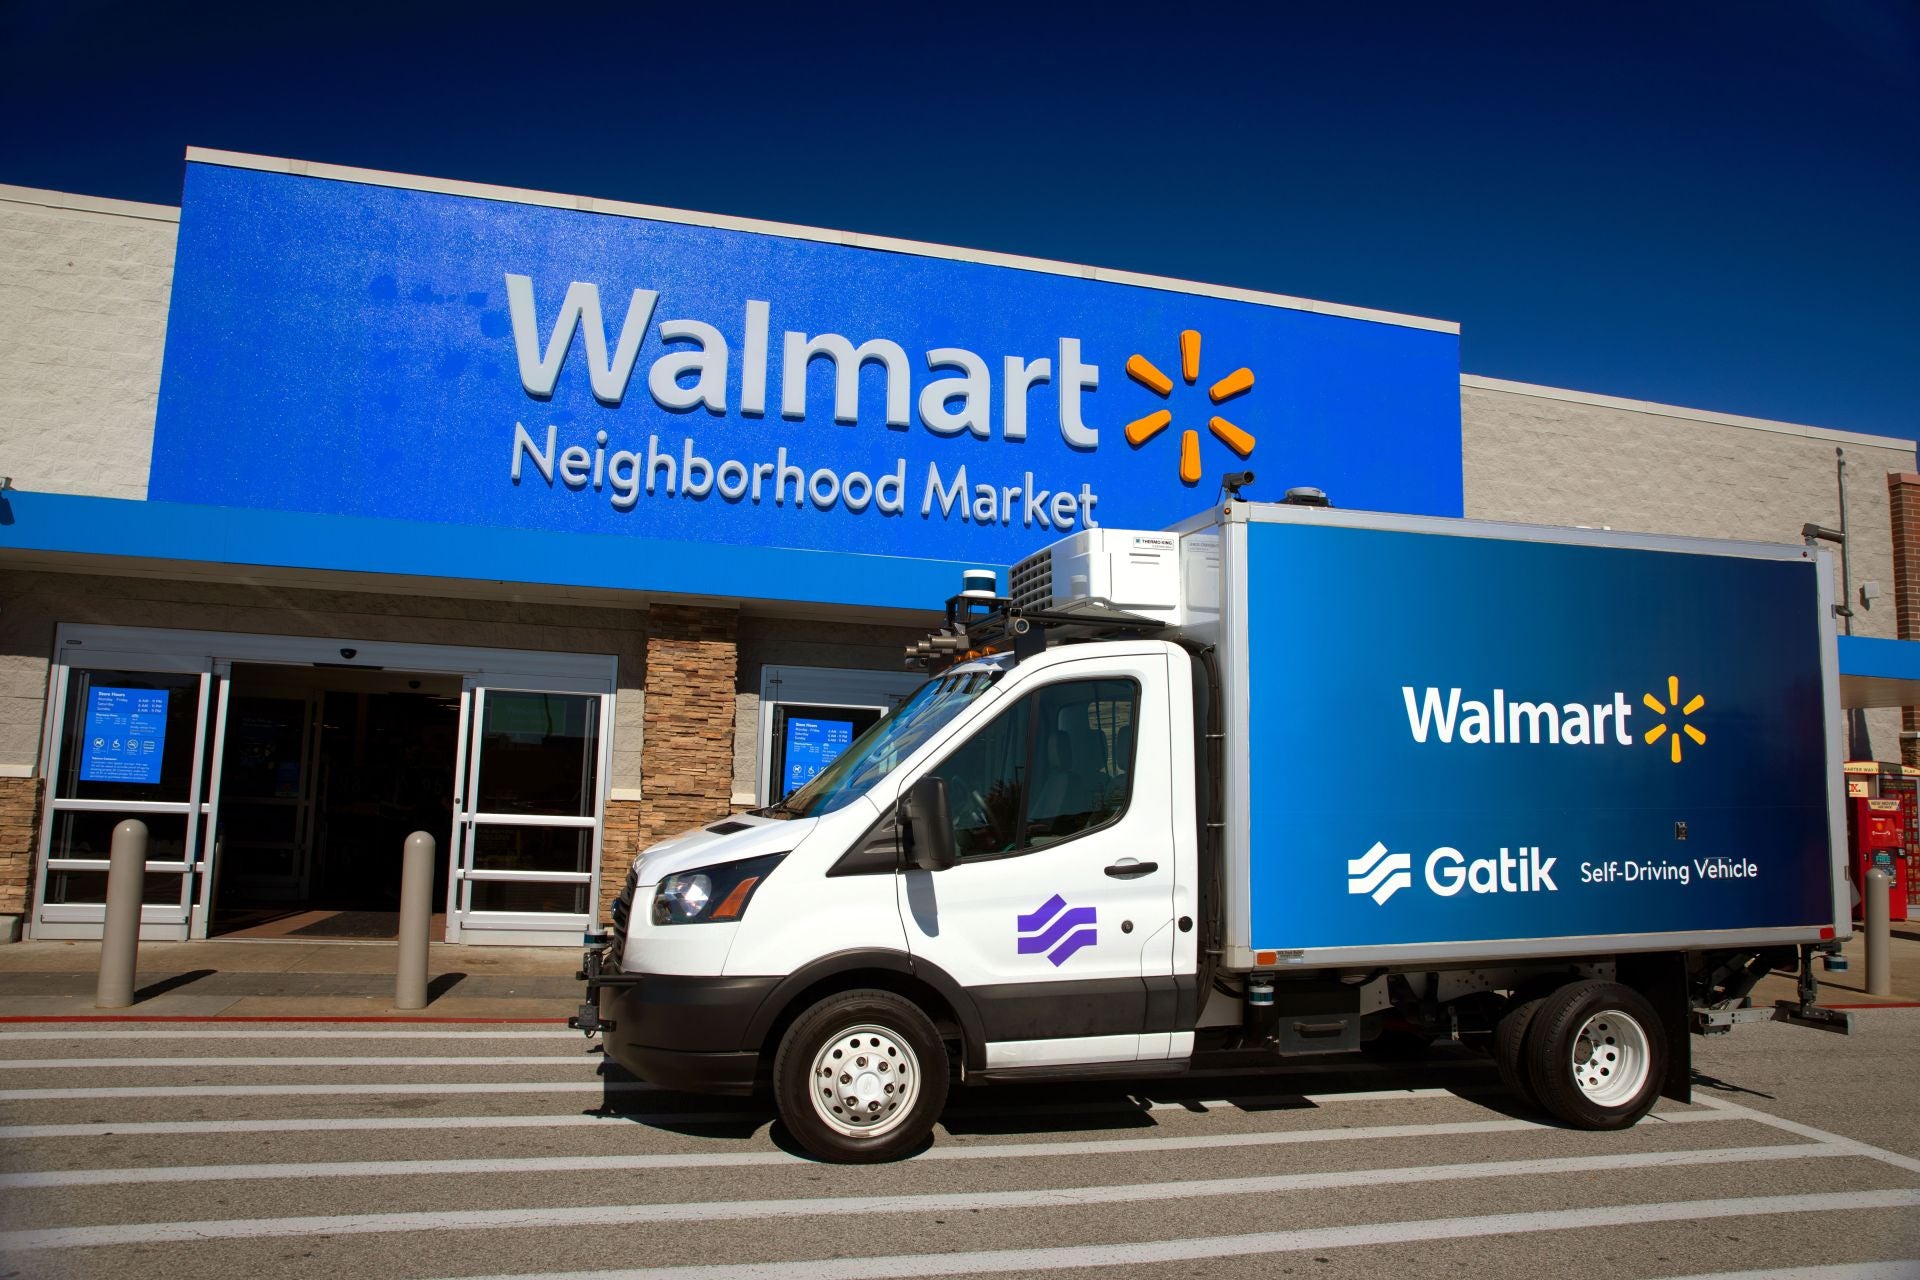 Gatik operating driverless trucks for Walmart deliveries in Arkansas